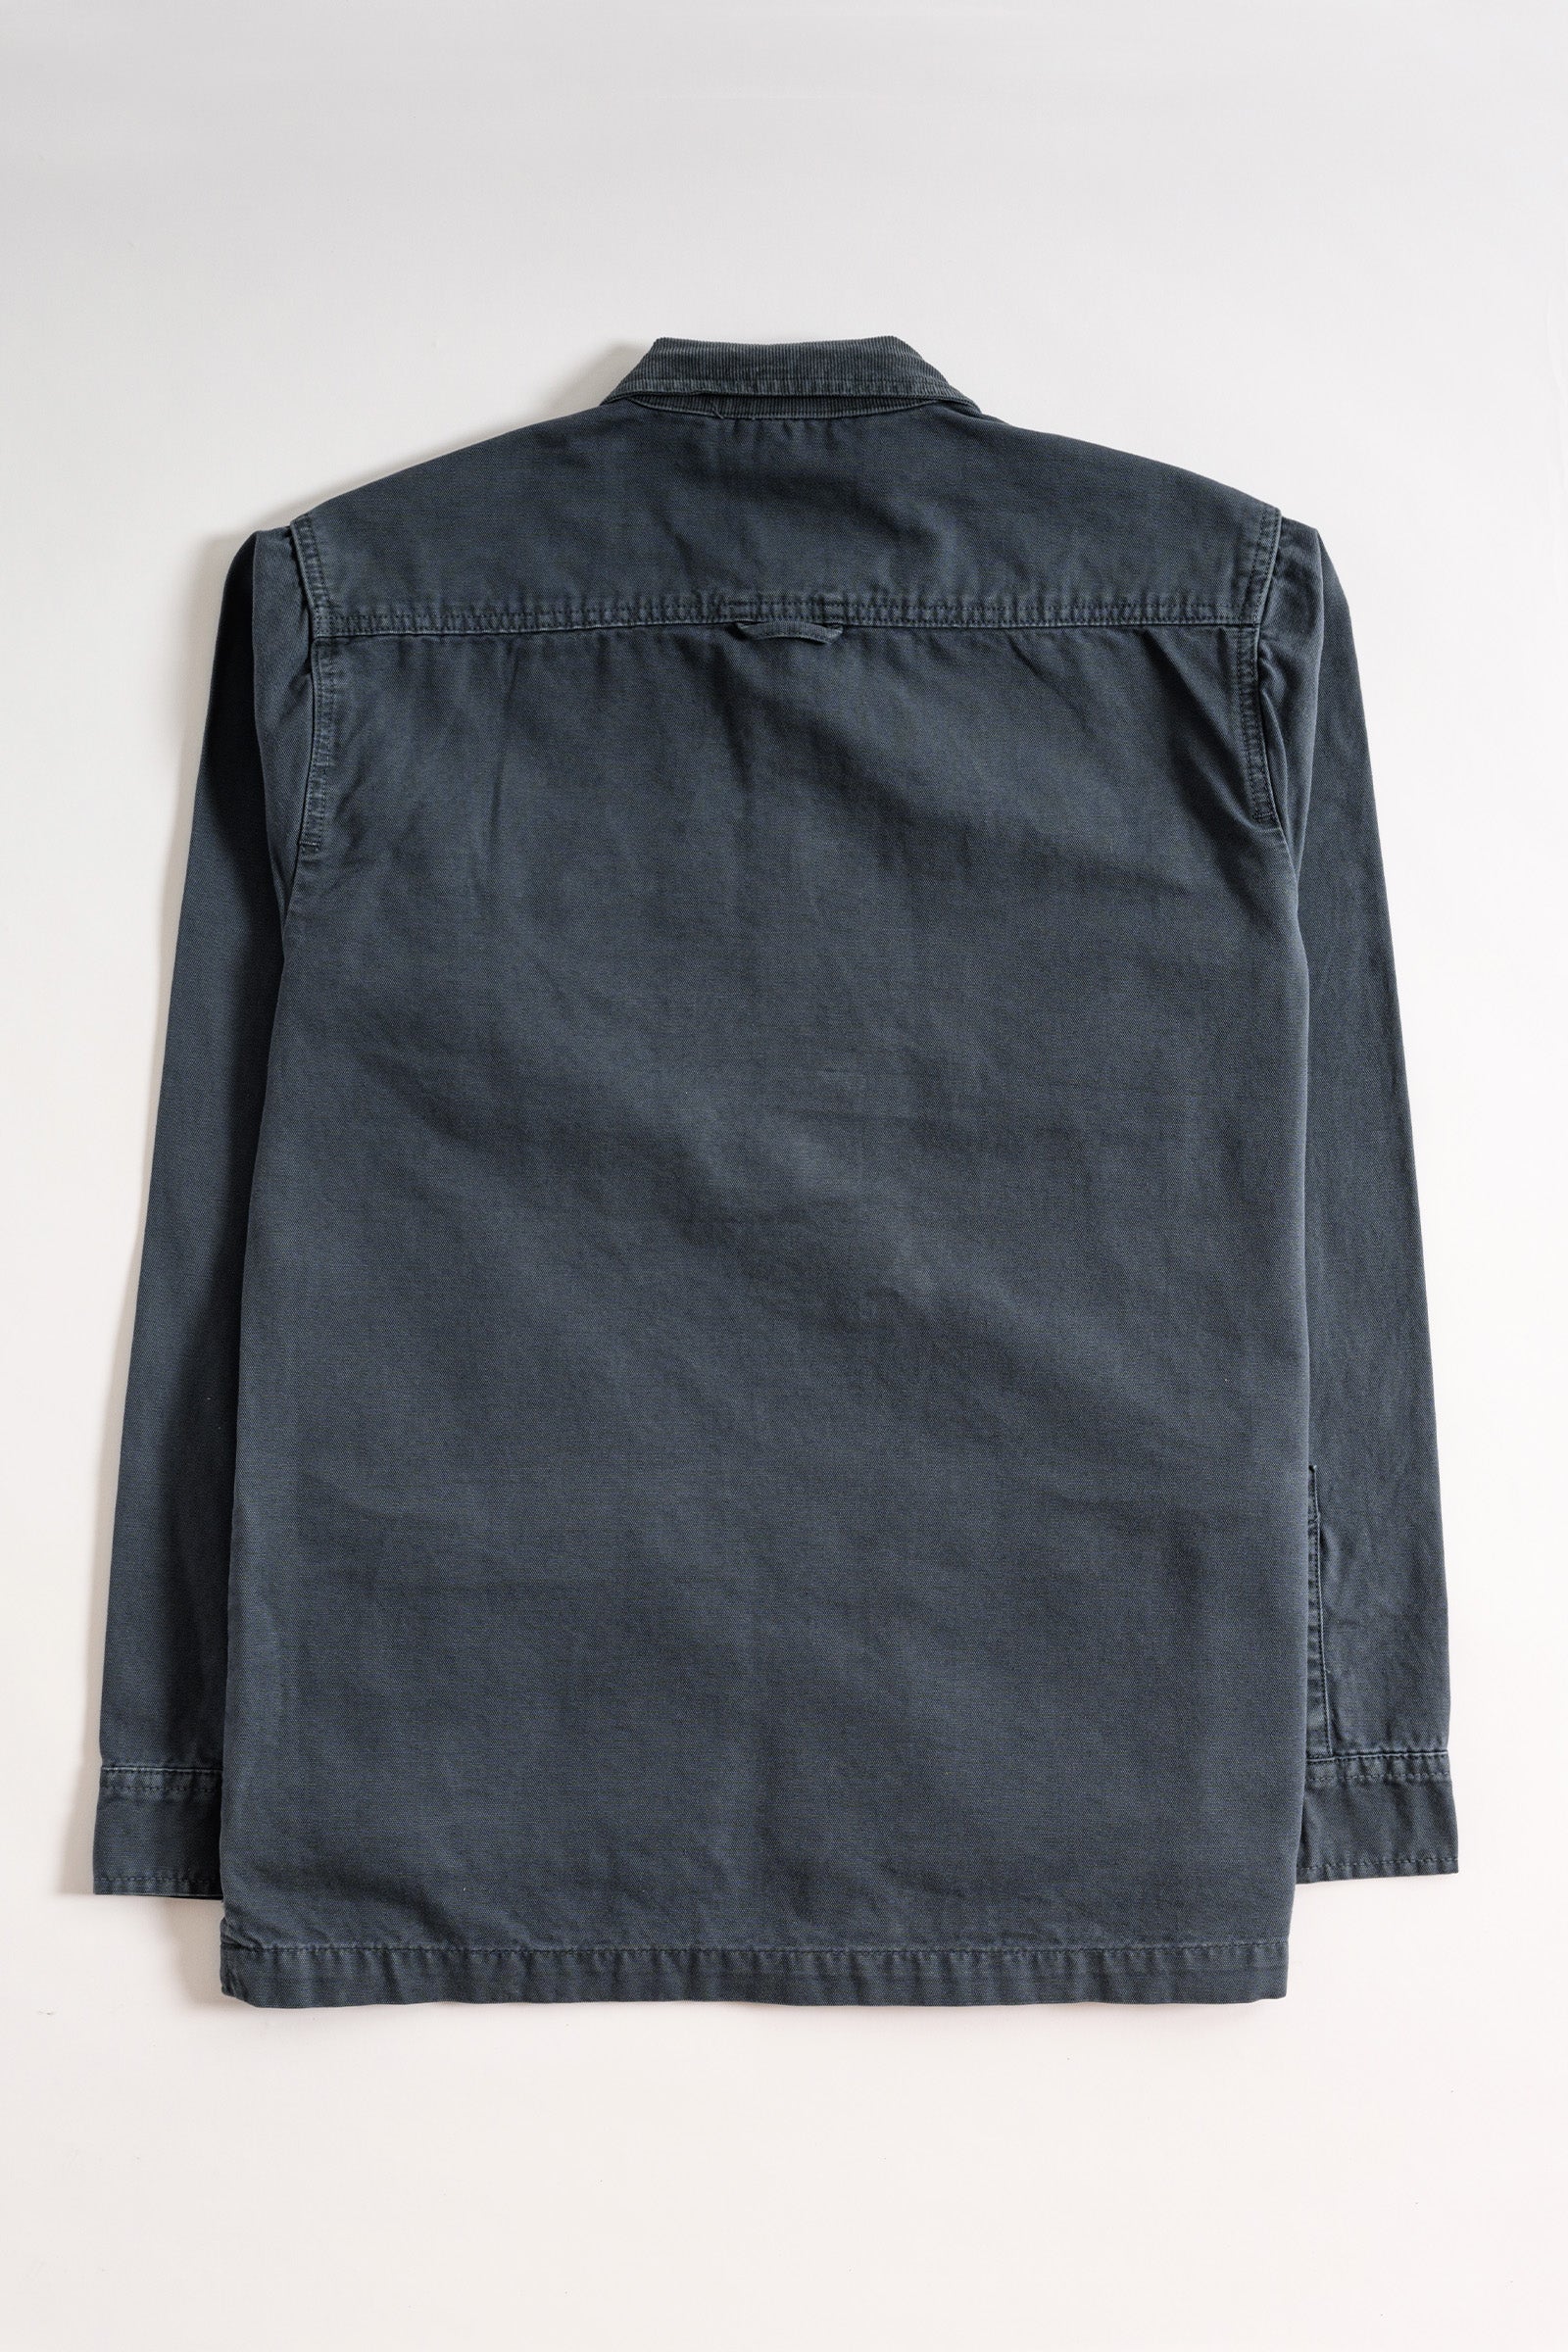 Original Paperbacks Anchorage Utility Jacket in Slate Flat Back